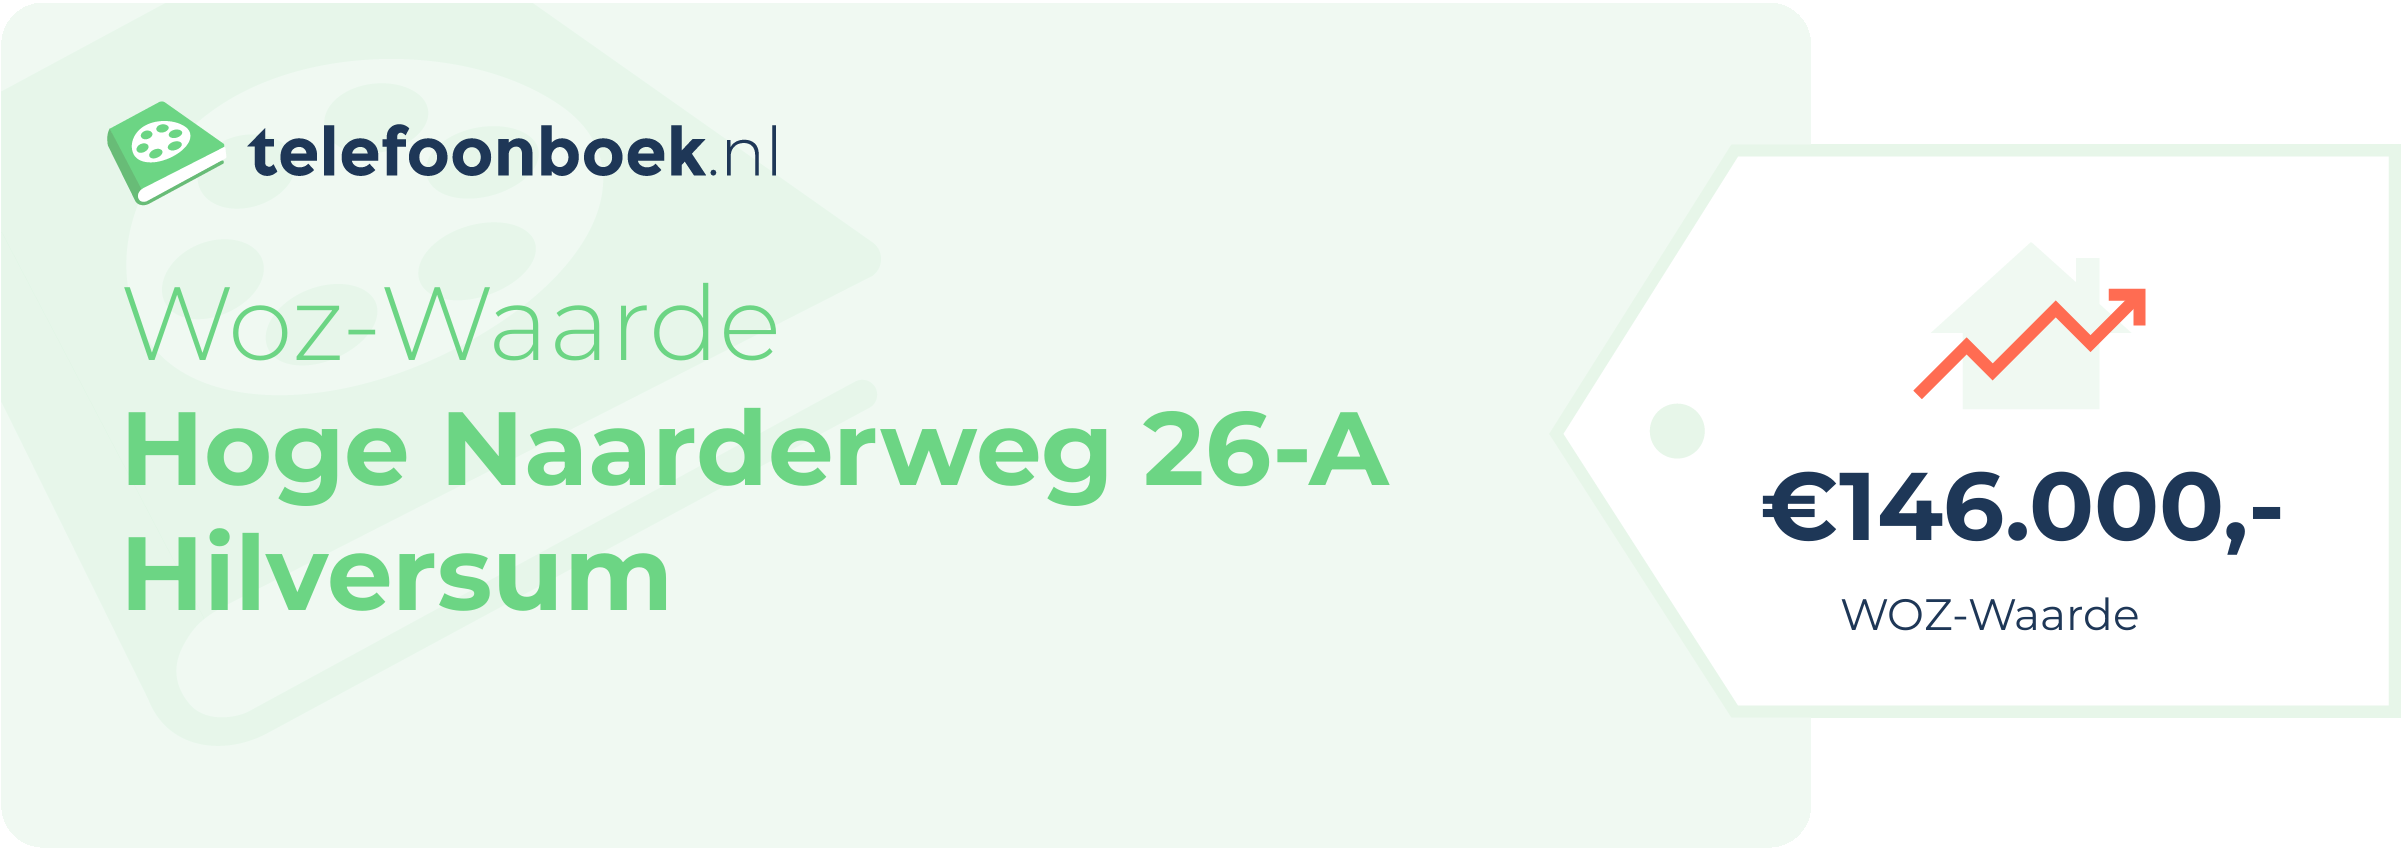 WOZ-waarde Hoge Naarderweg 26-A Hilversum